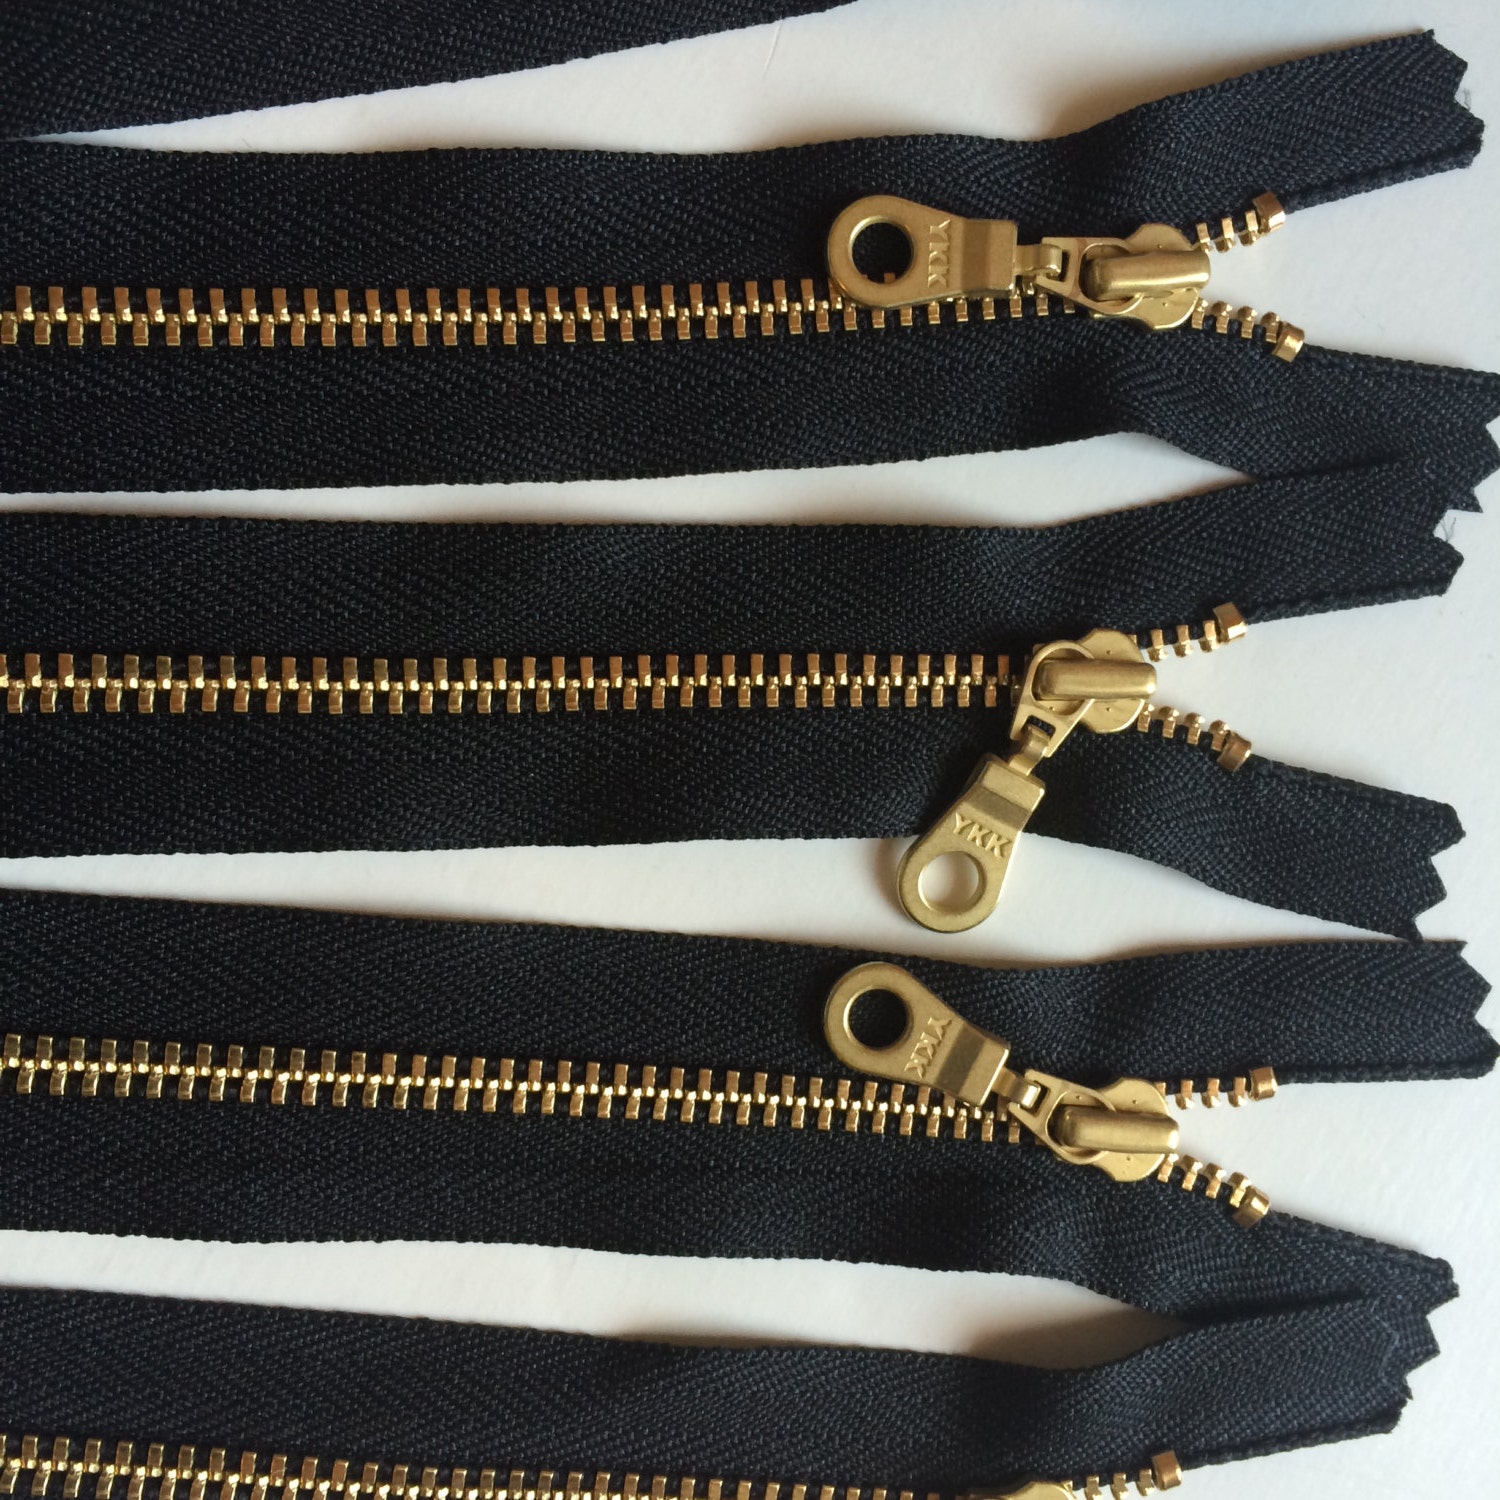 Gold Metal Zippers by YKK - no. 5 10 inch Zipper - 10 Pieces 